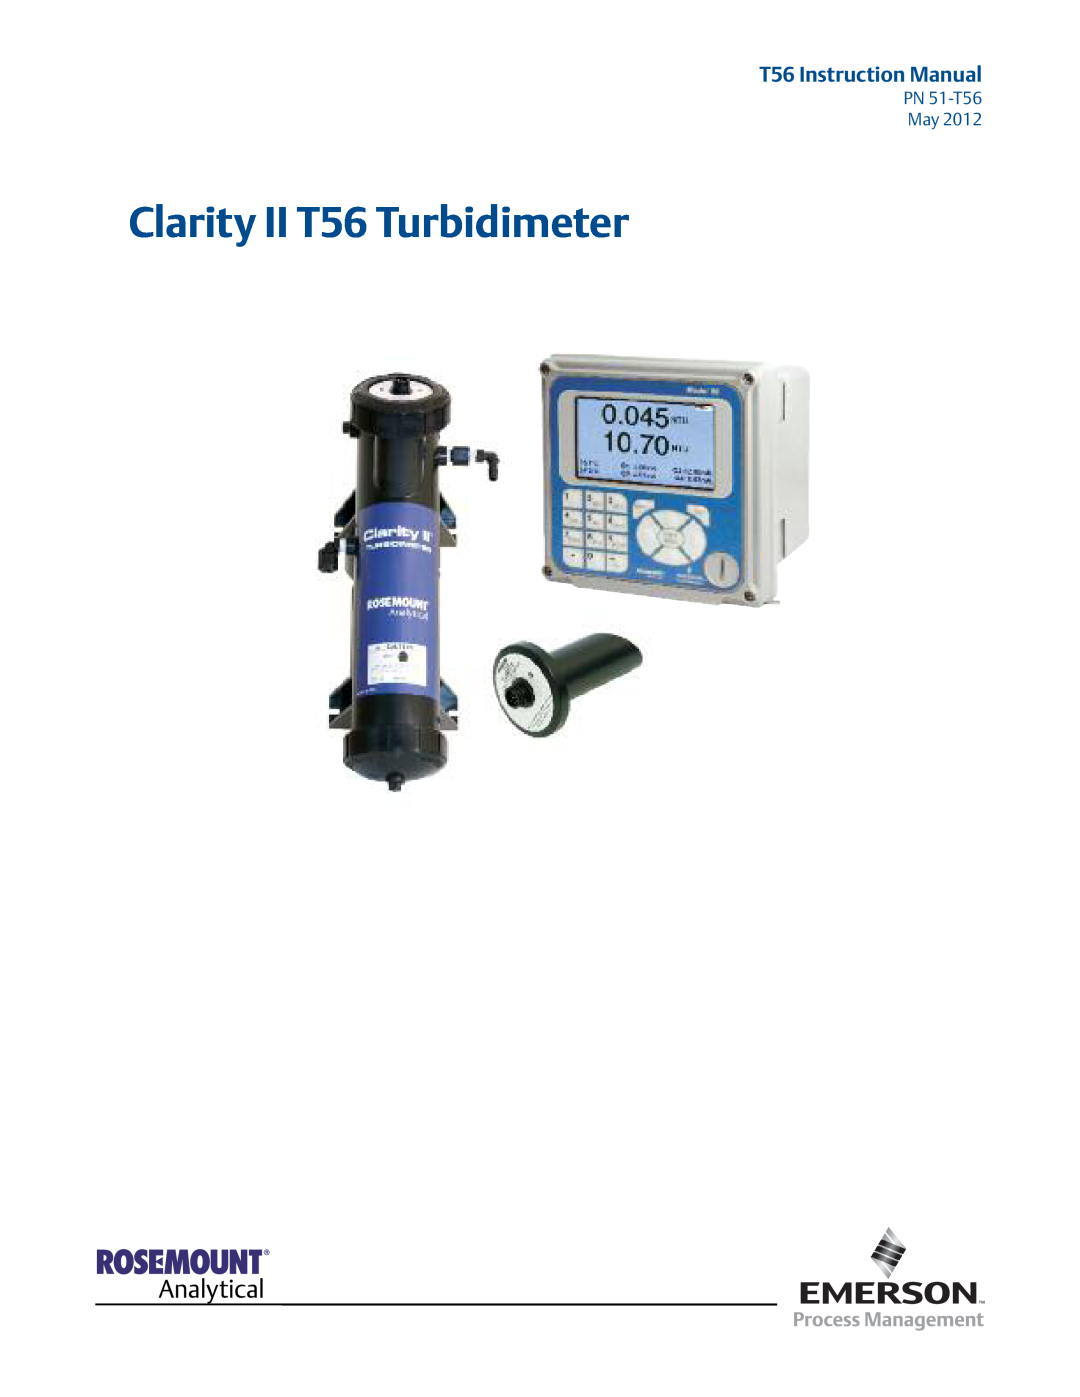 Emerson PN-51-T56 instruction manual Clarity II T56 Turbidimeter 